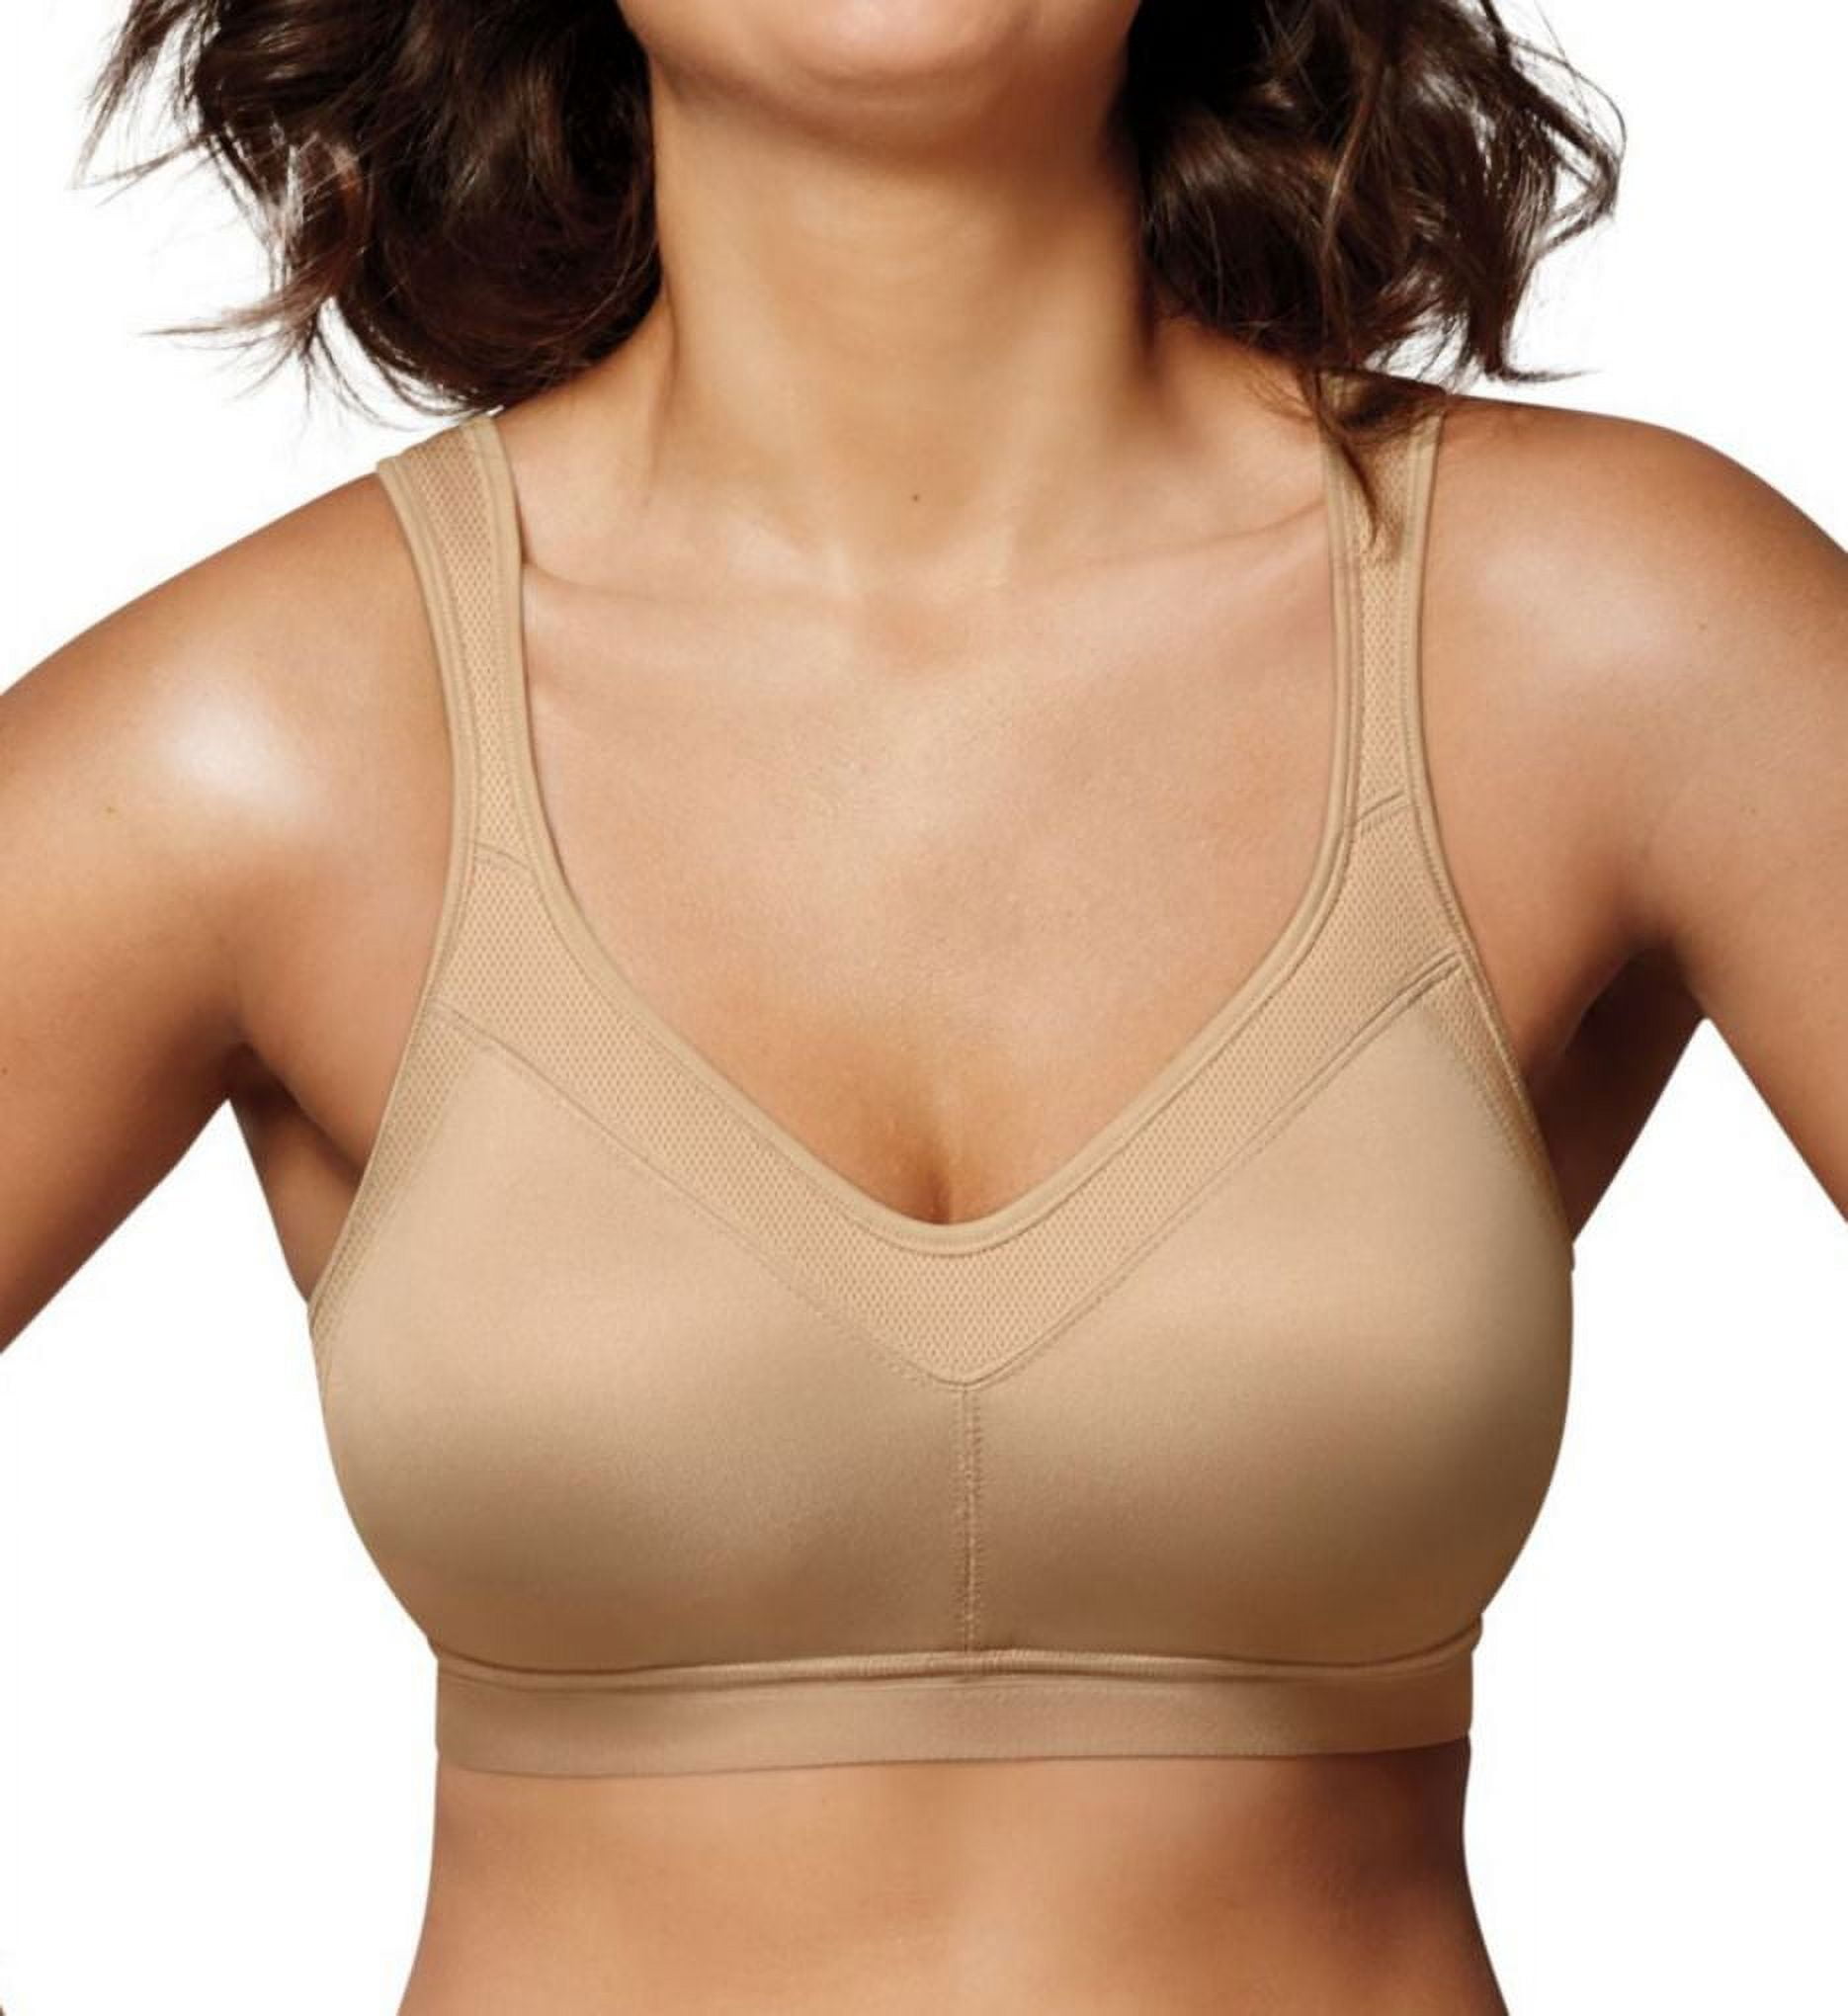 playtex women's 18 hour breathably cool wirefree bra, black - 40dd